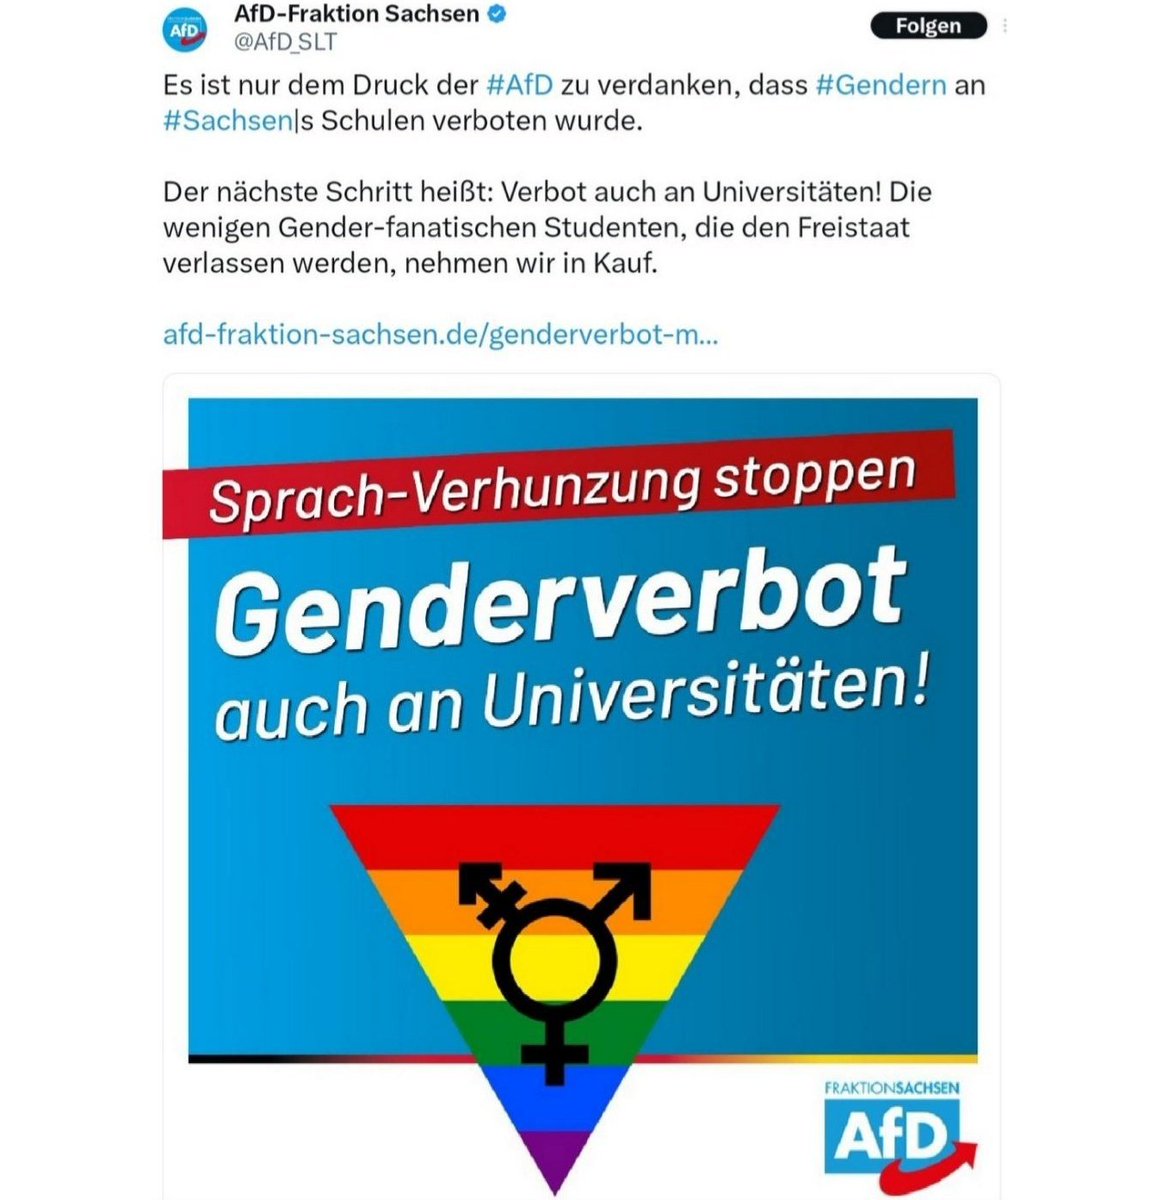 AfD-Antrag: Deutsche Flagge statt Regenbogen-Ideologie an Schulen